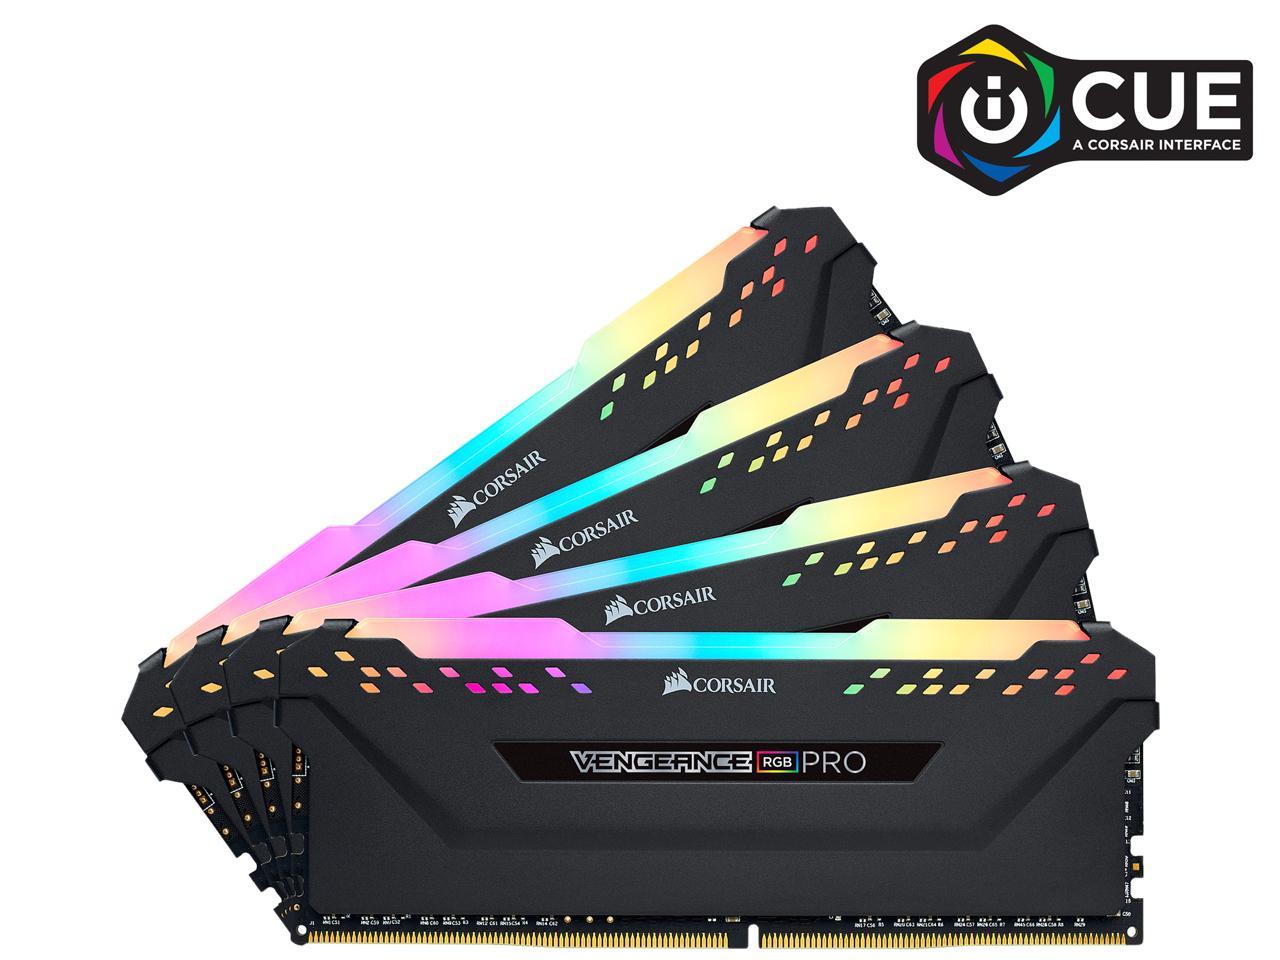 CORSAIR Vengeance RGB Pro 64GB (4 x 16GB) 288-Pin PC RAM DDR4 3600